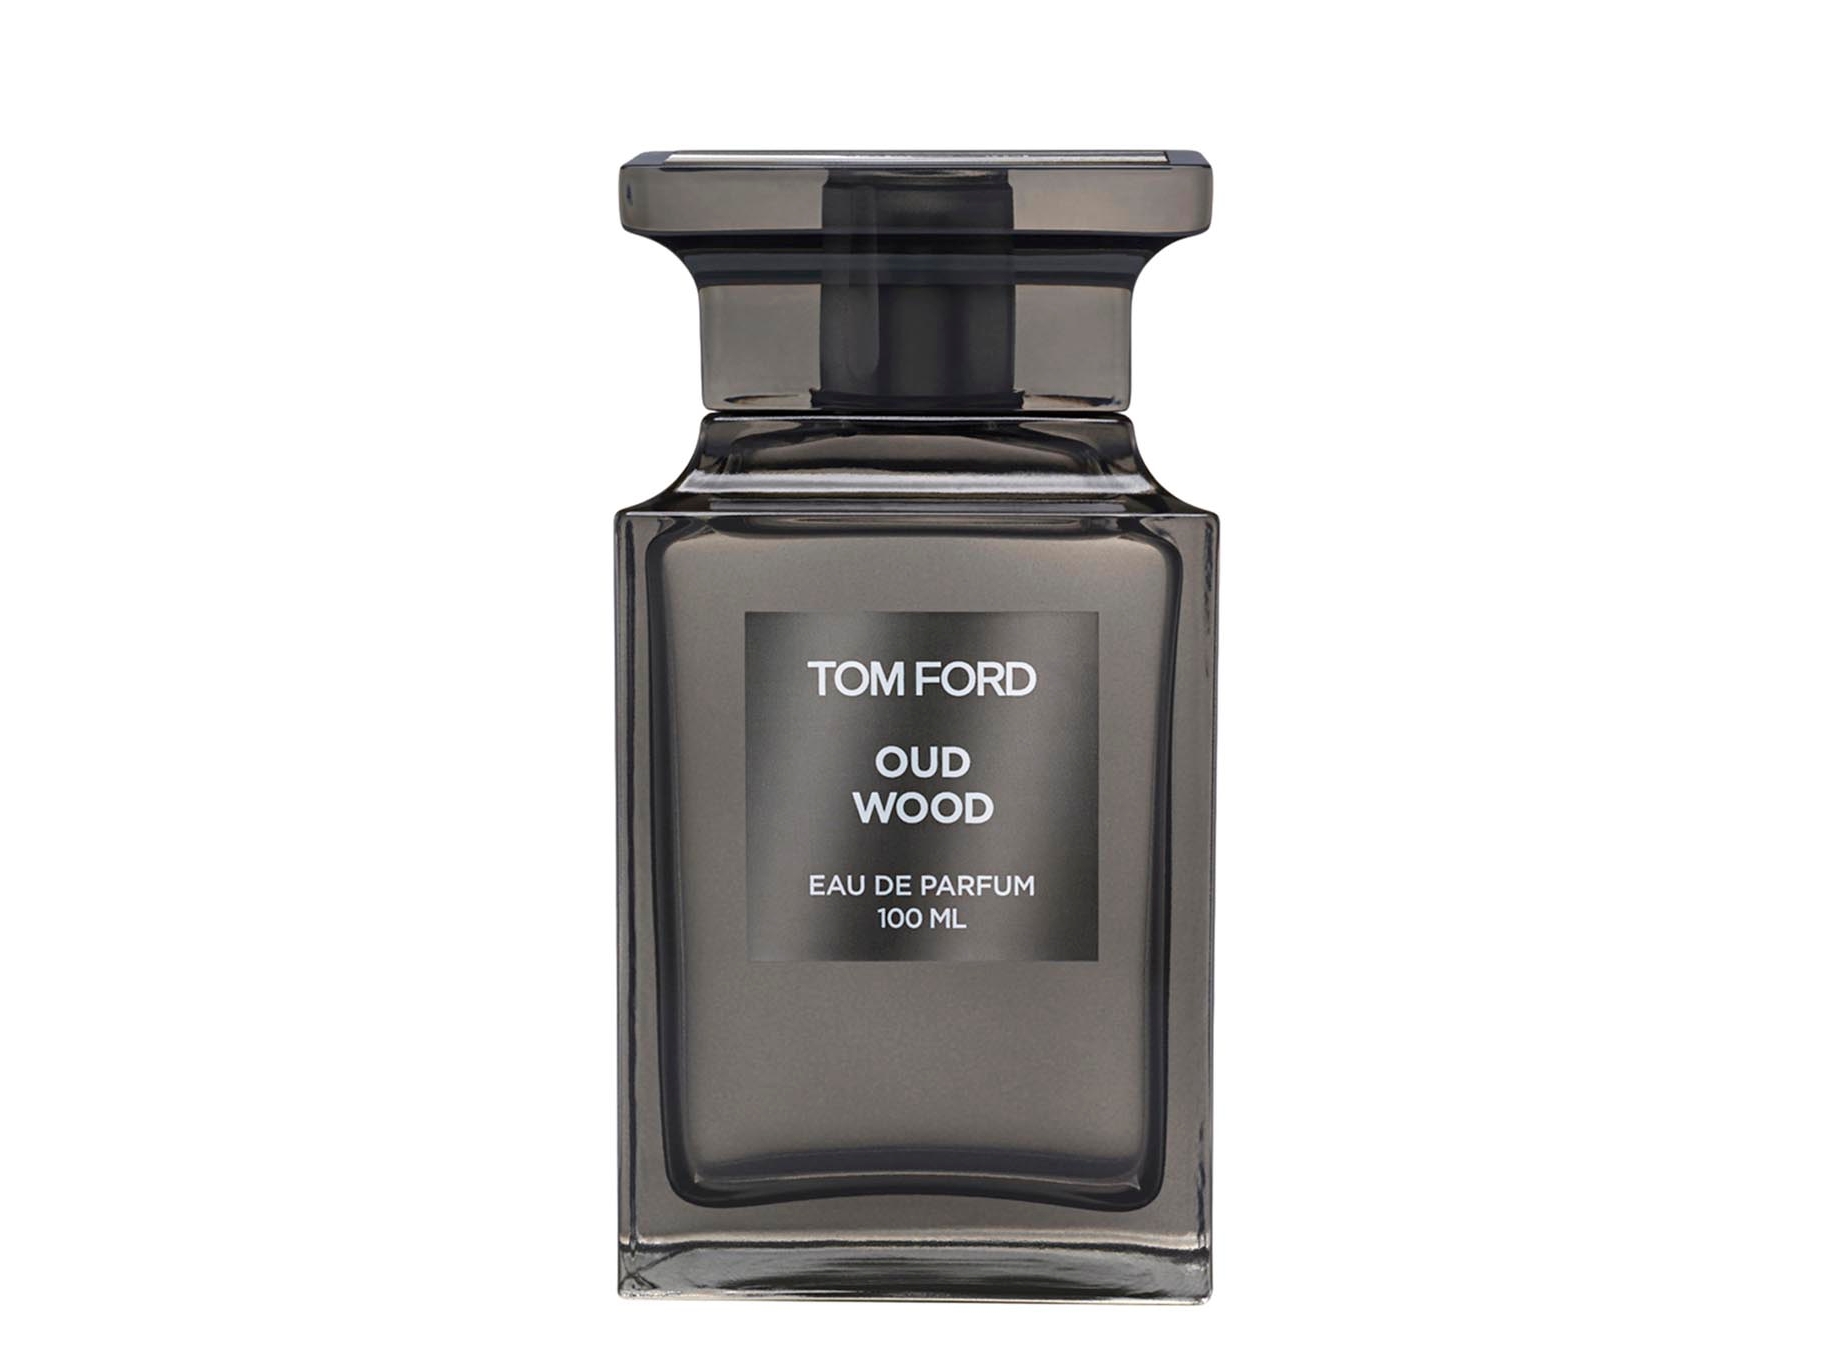 Tom Ford Oud Wood Eau De Parfum 100ml - Harvey Nichols